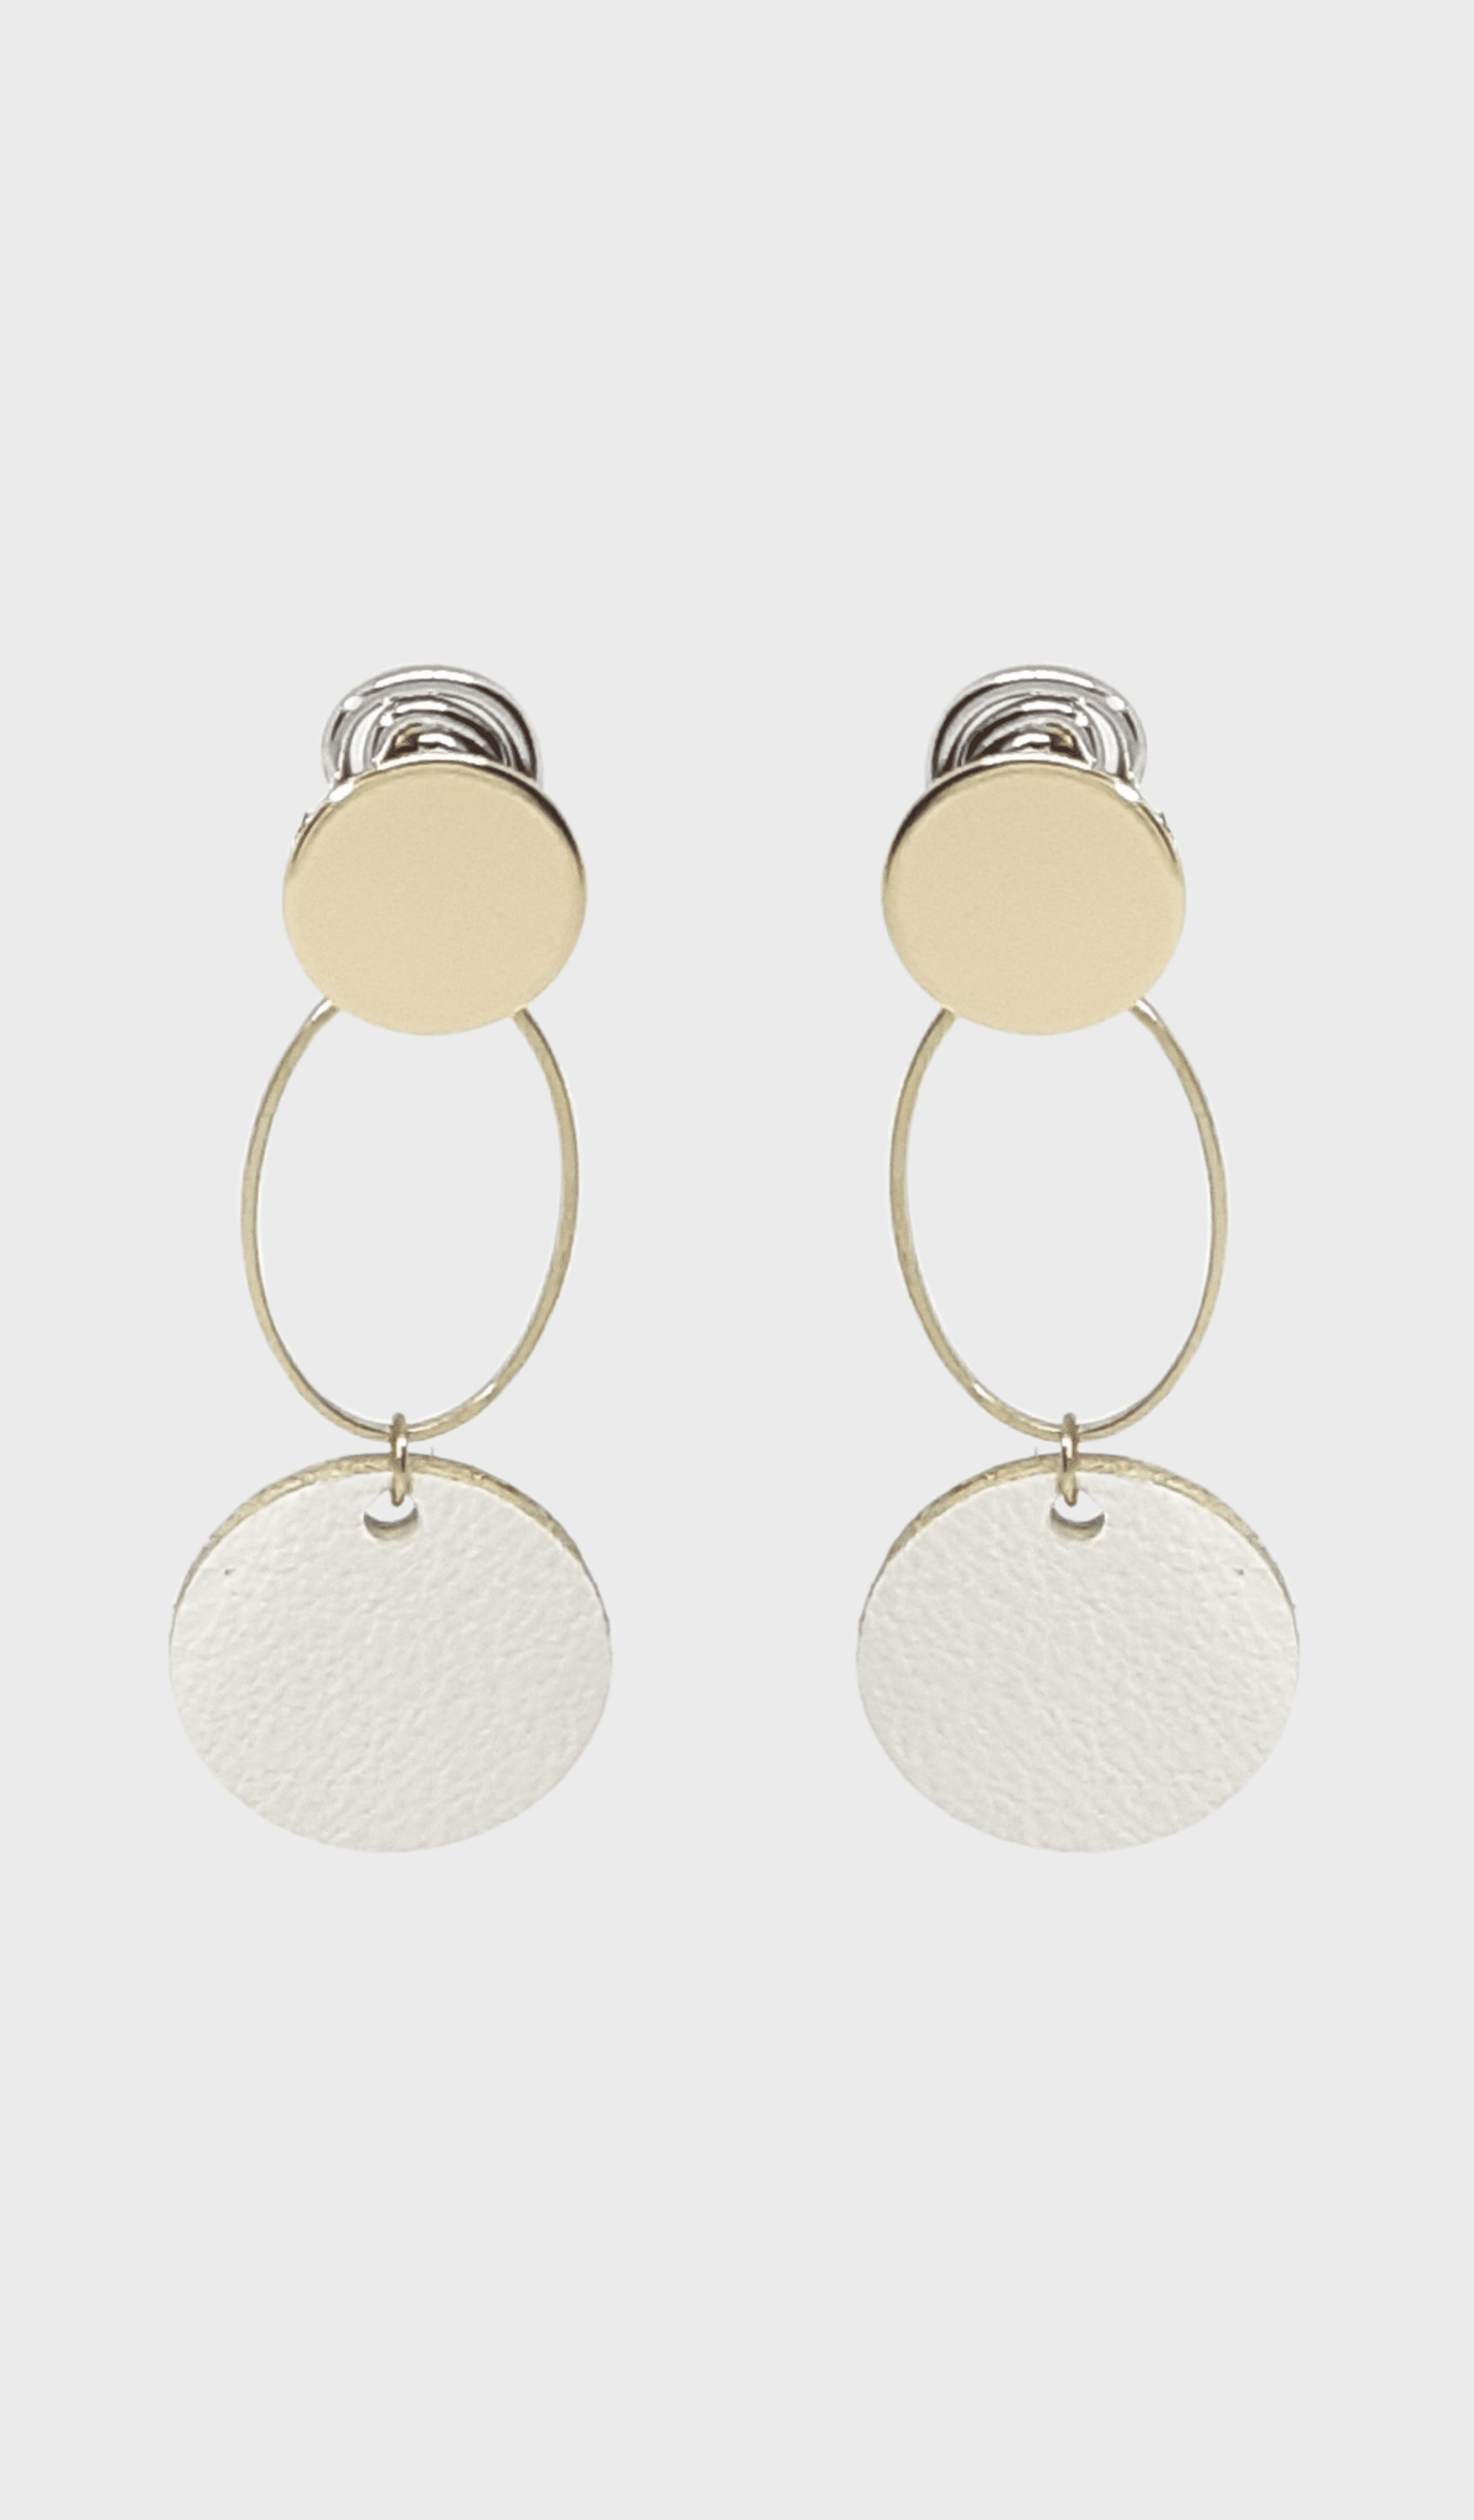 Rent Oval Ring Earrings on Dressr